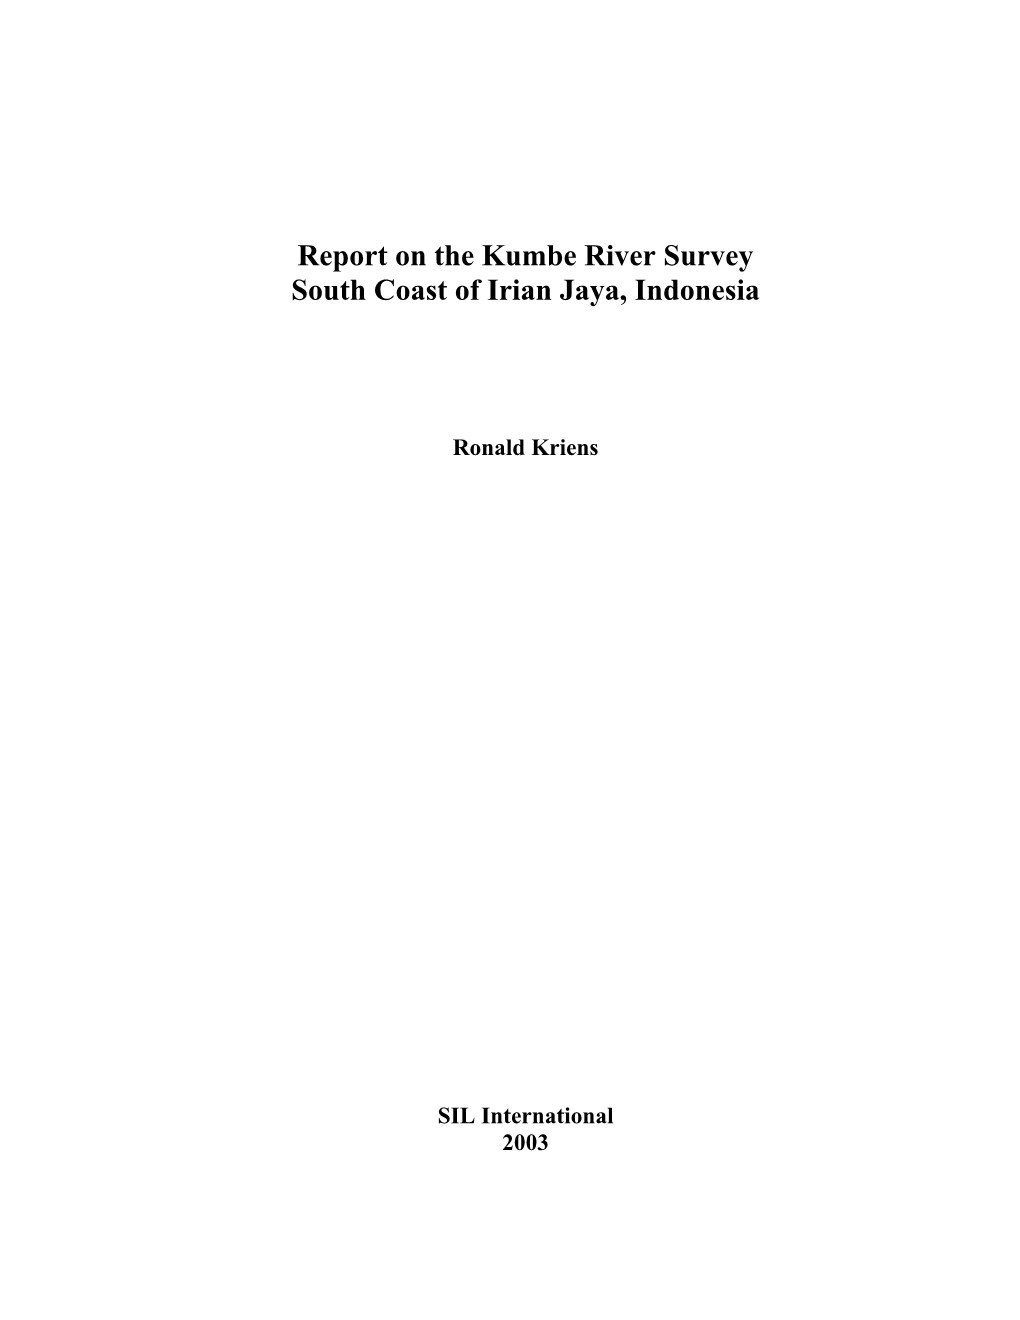 Report on the Kumbe River Survey South Coast of Irian Jaya, Indonesia